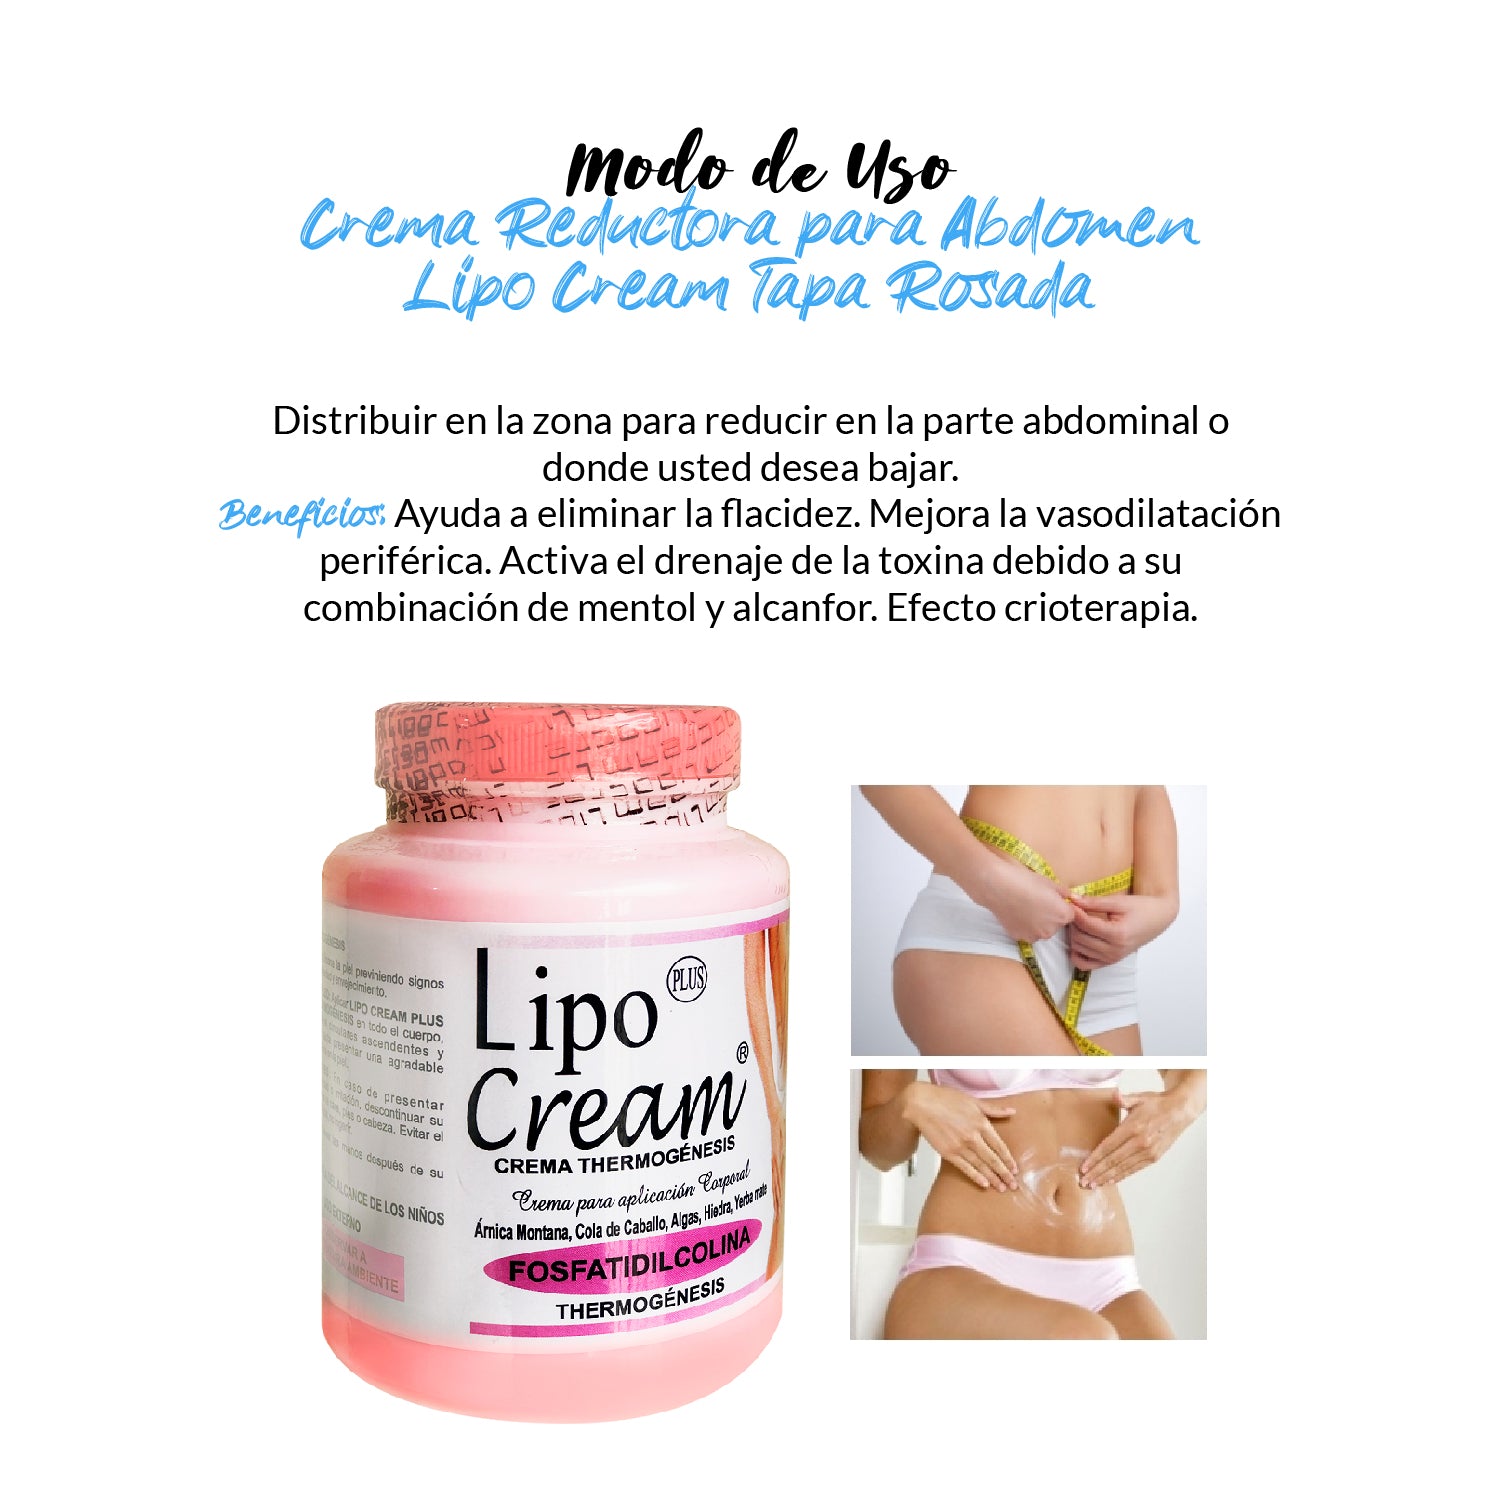 Crema Reductora para Abdomen Lipo Cream Tapa Rosada